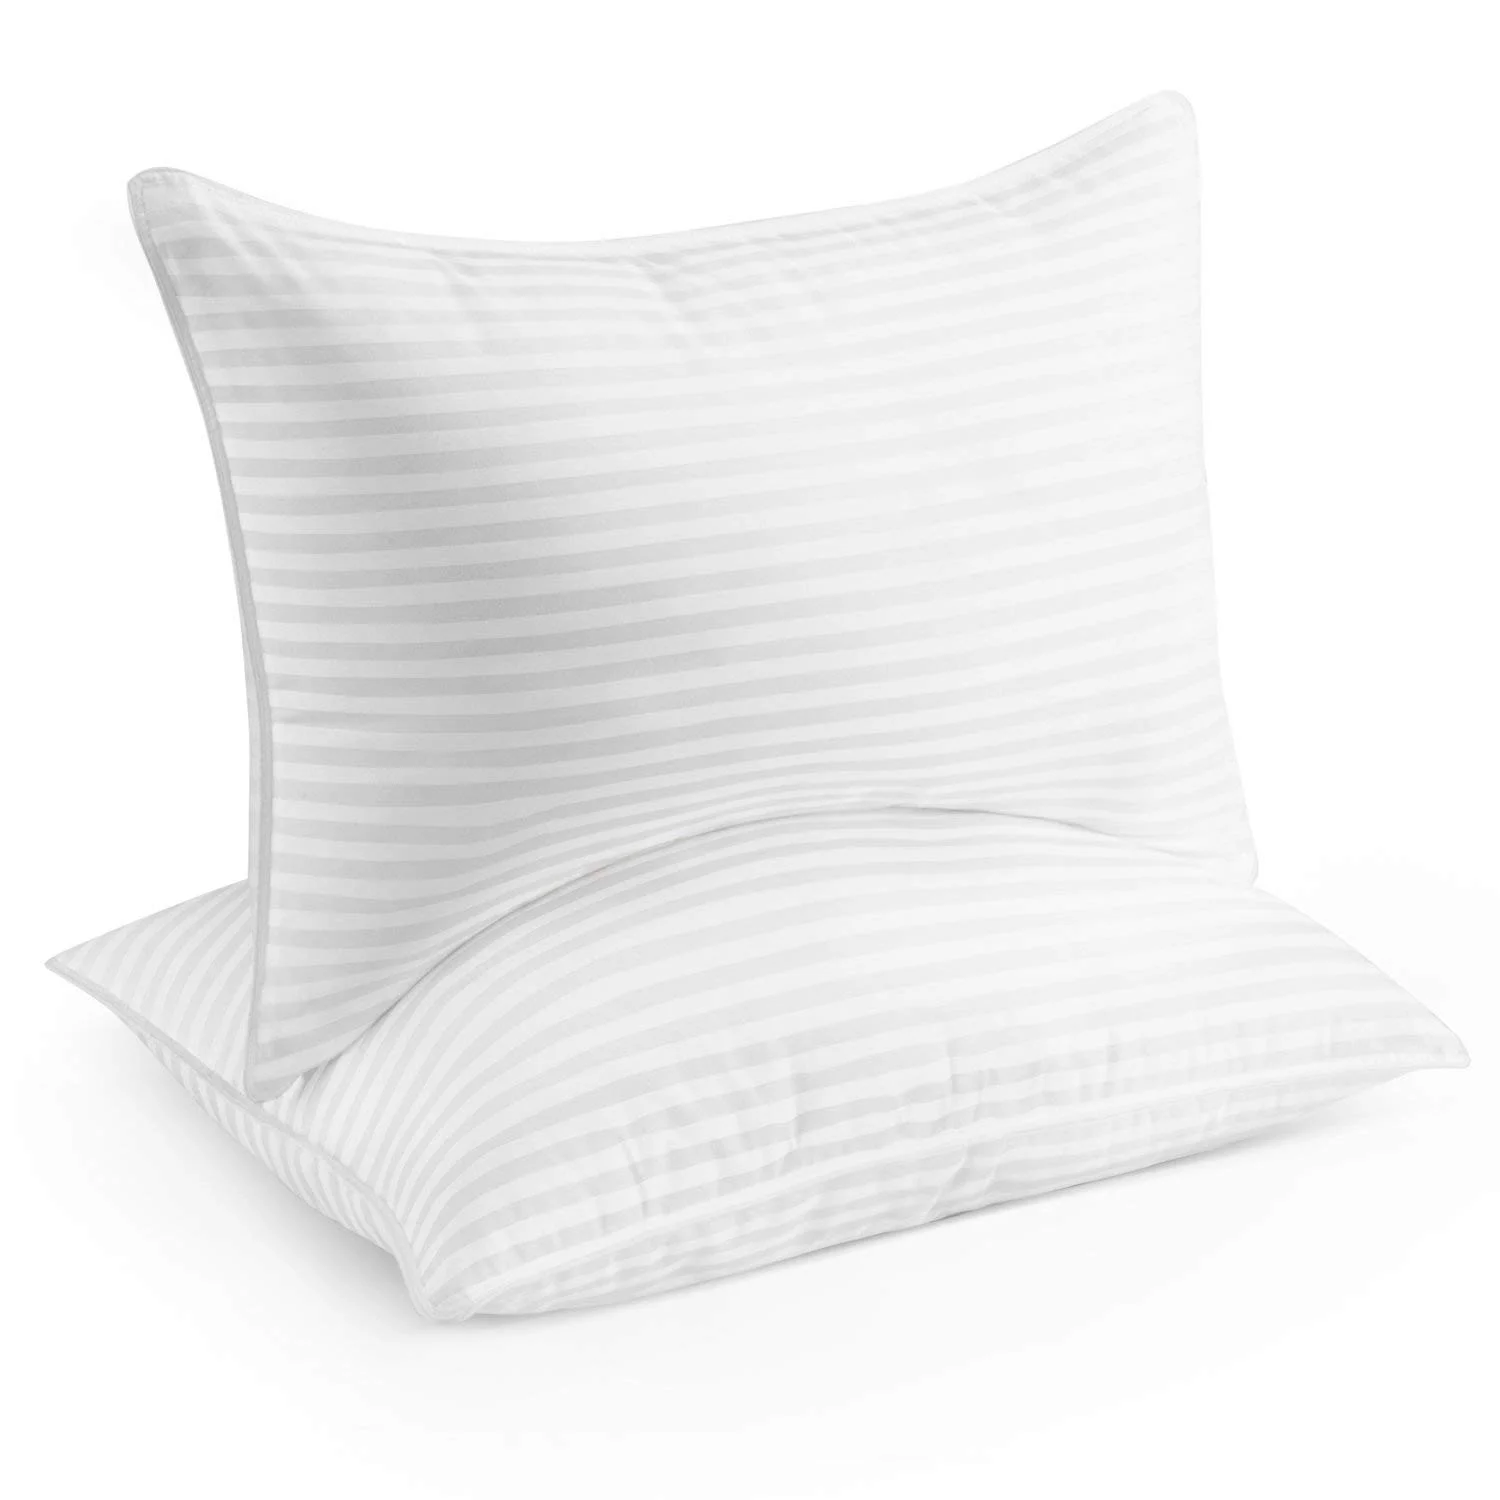 Beckham Hotel Collection Gel Pillow - Luxury Plush